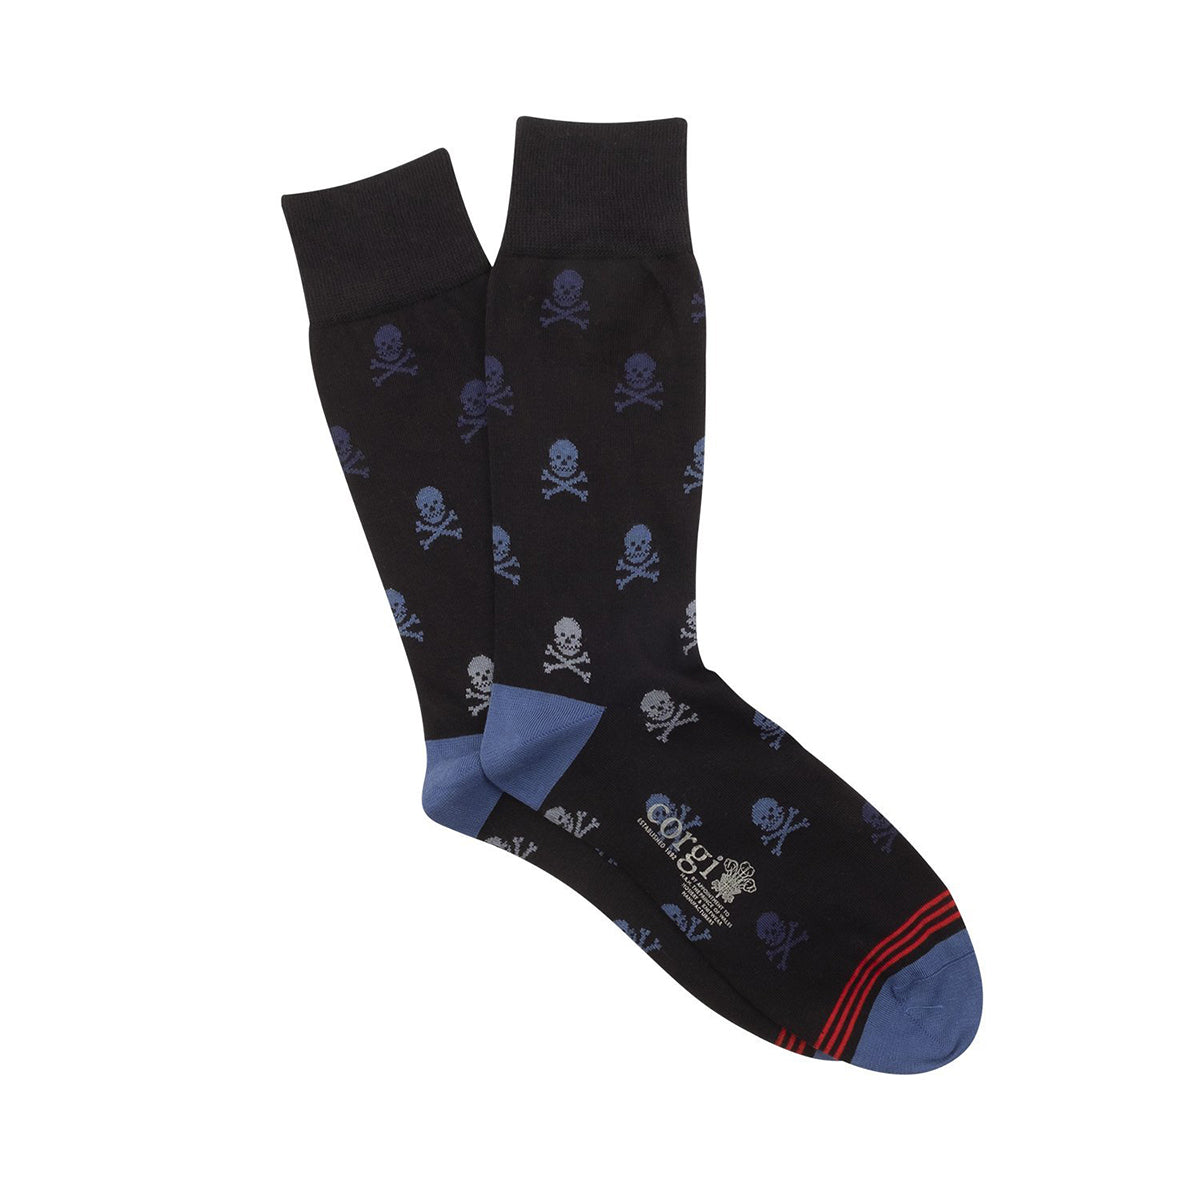 Navy ‘Skull & Crossbones’ Premium Cotton Socks  Robert Old   